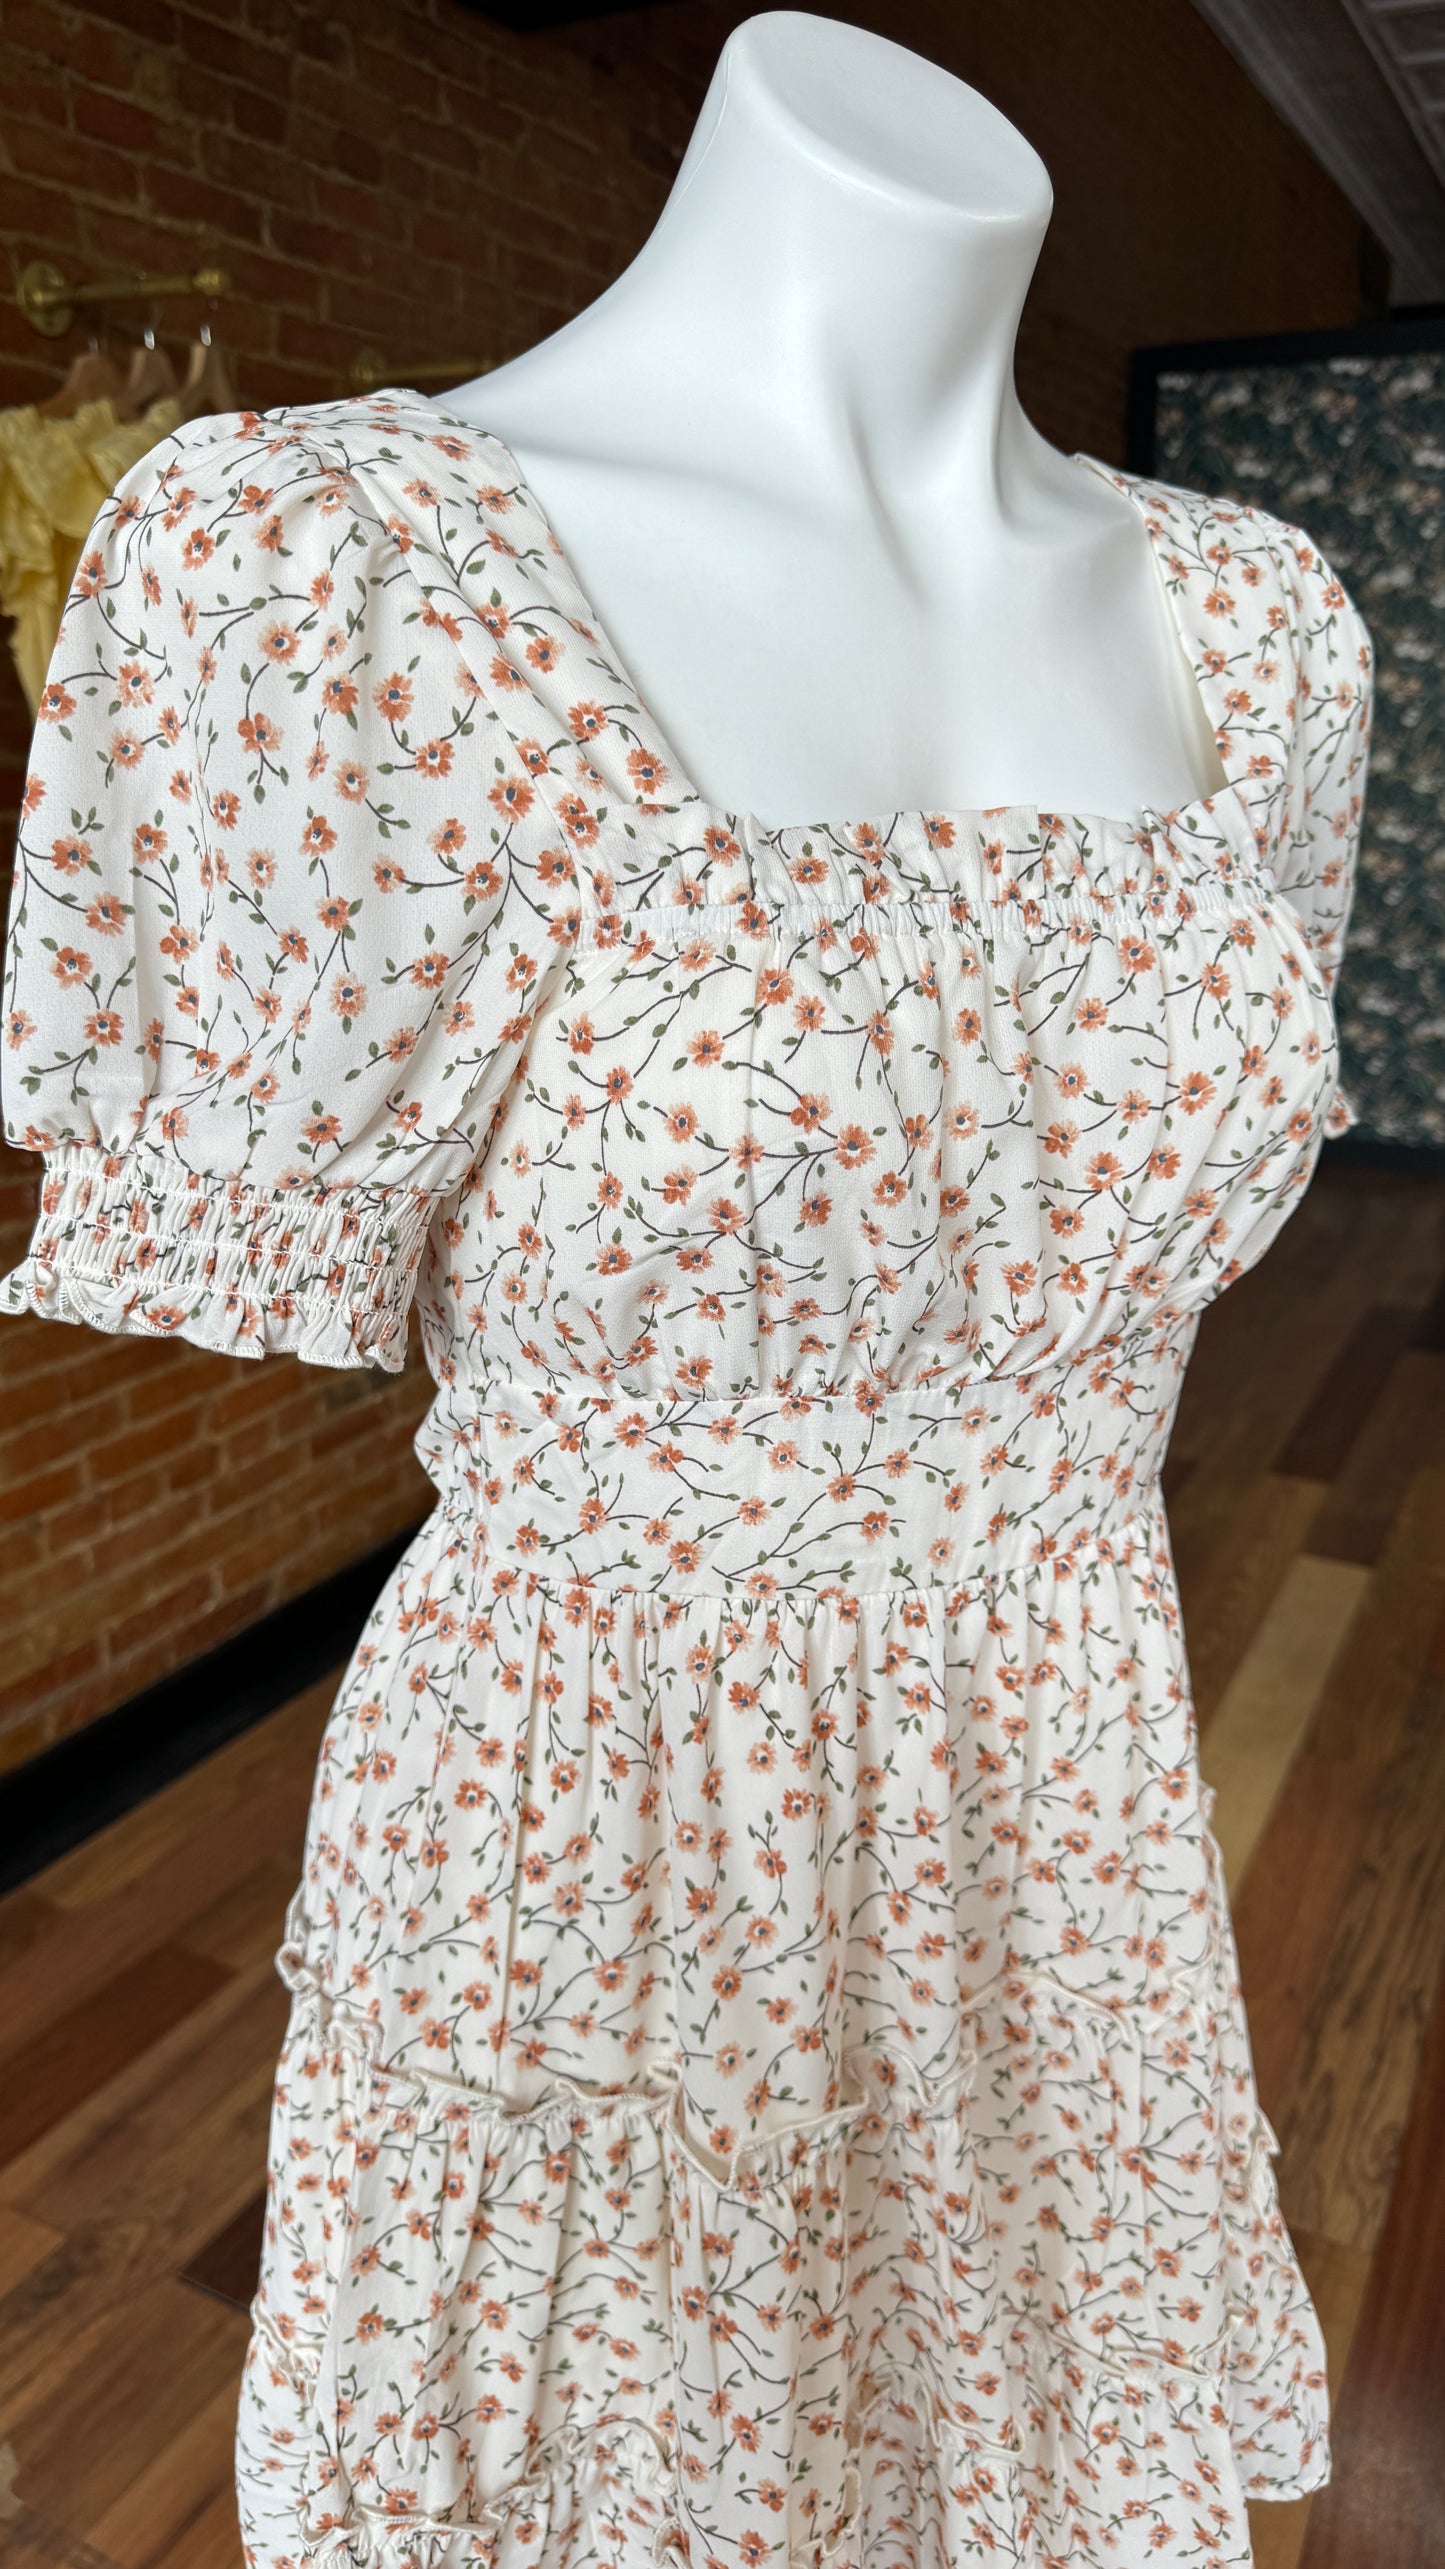 Orange Flower Mini Dress